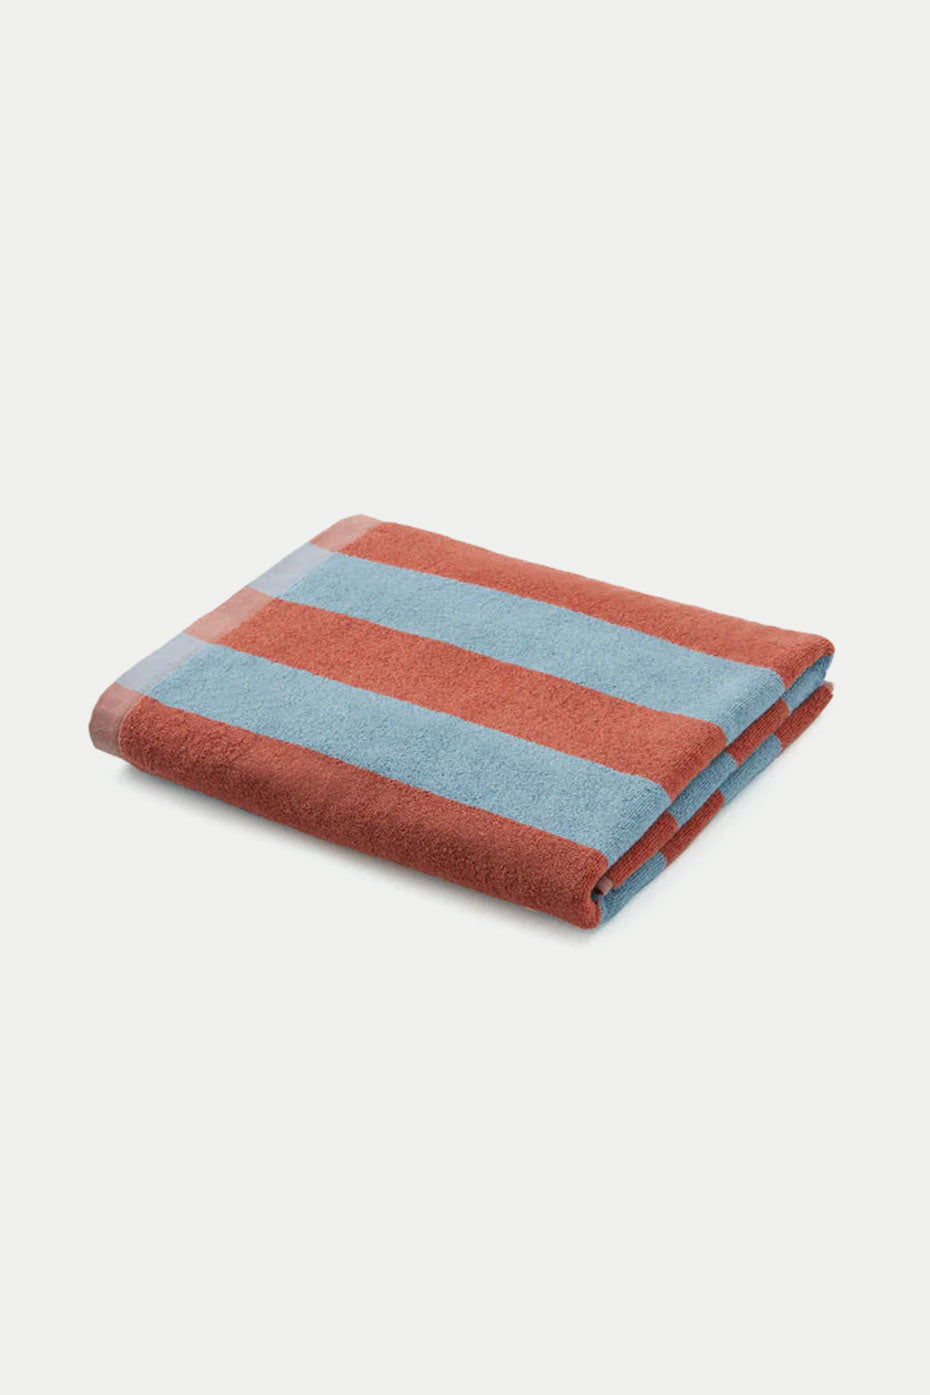 Picnic Stripes Towel